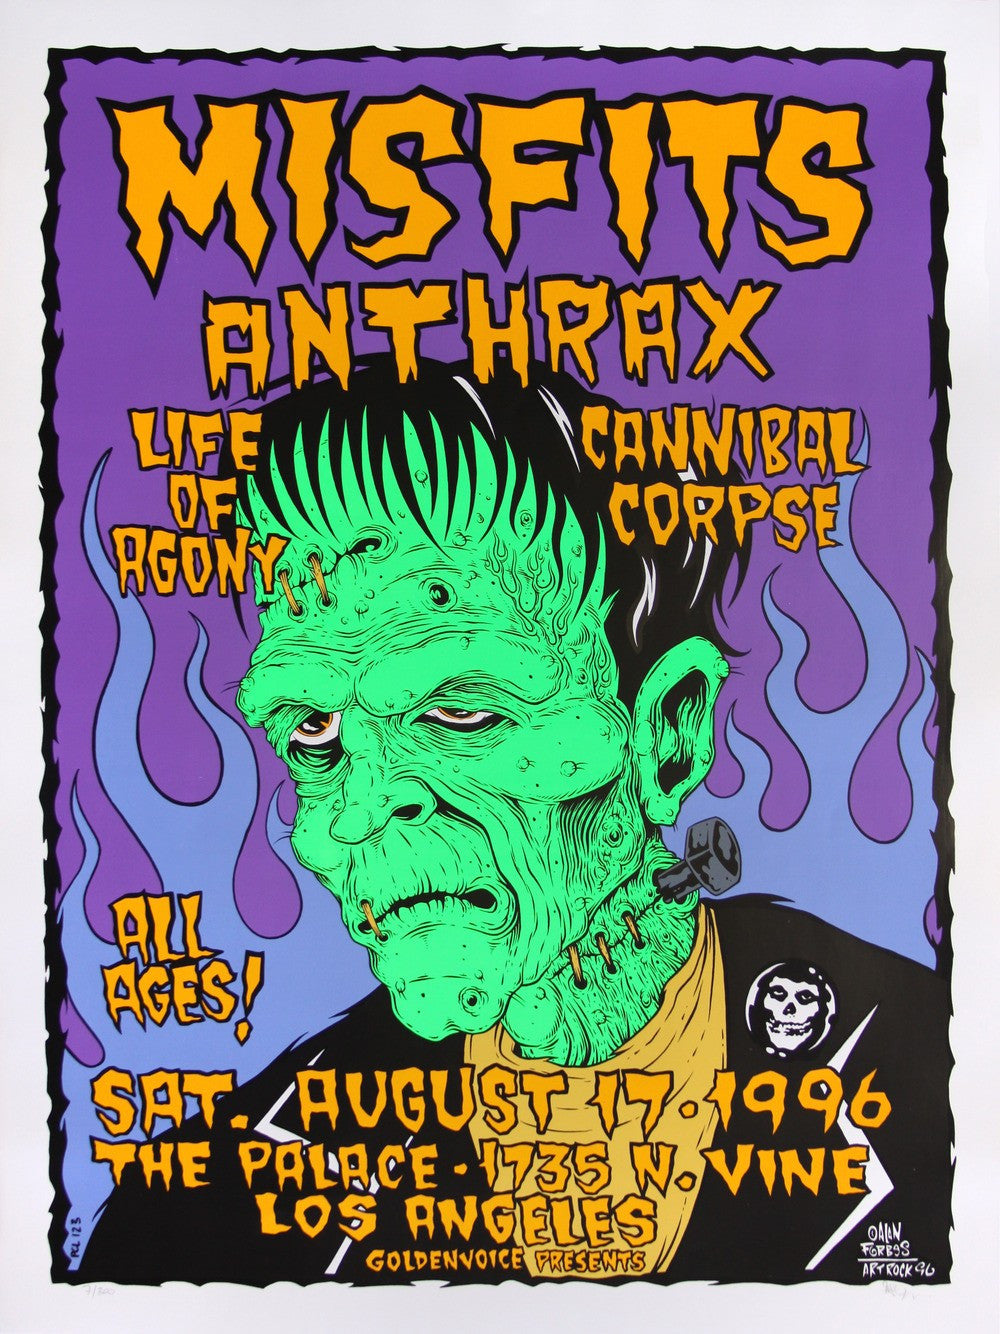 Alan Forbes - 1996 - Misfits / Anthrax Concert Poster